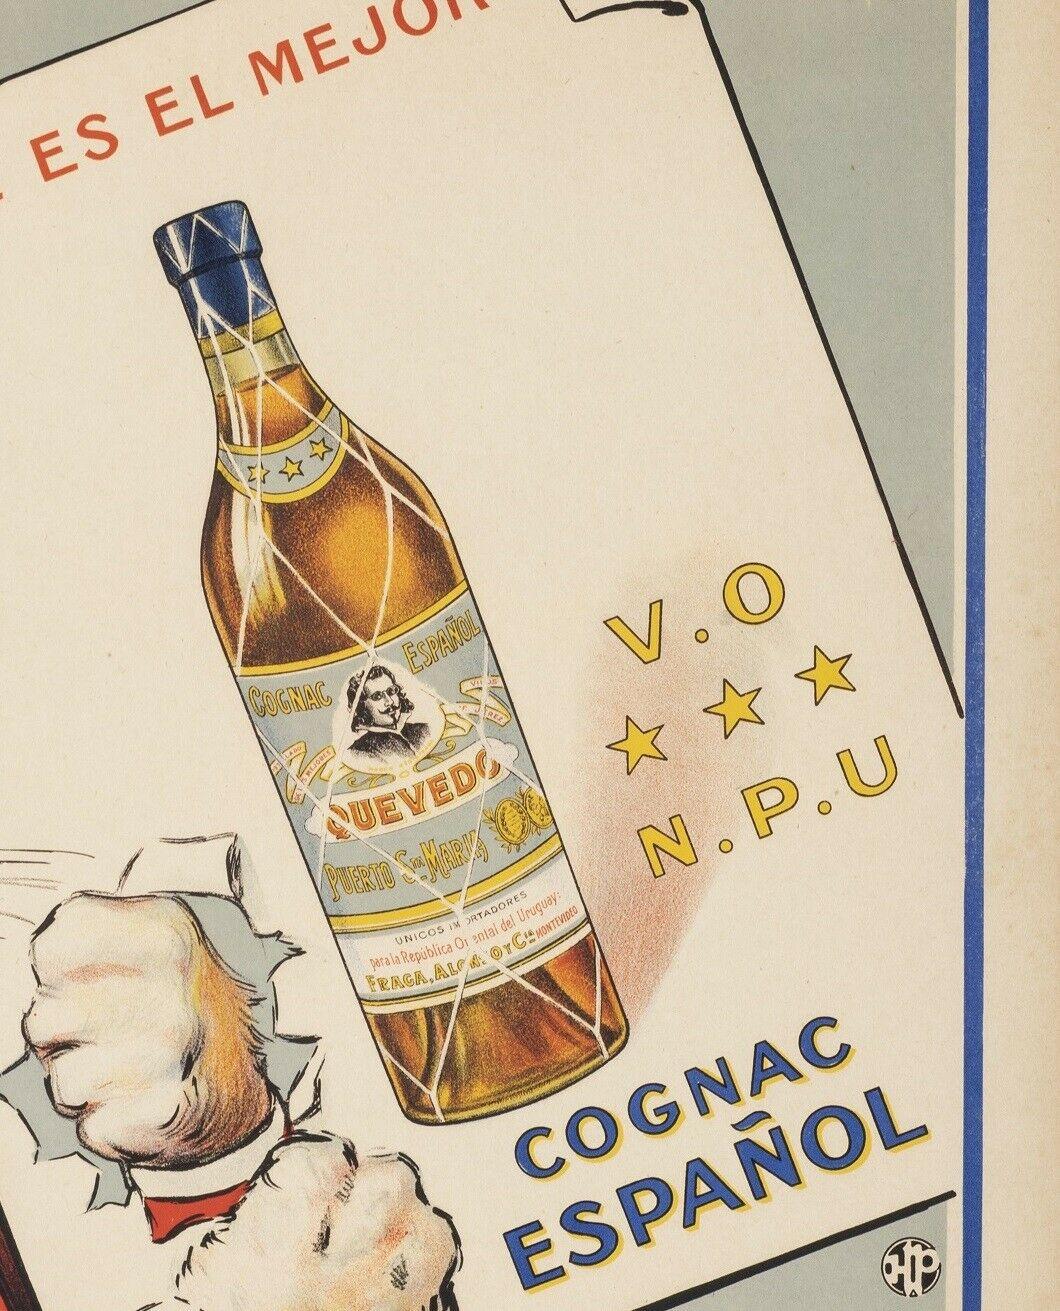 Original Poster-Cognac Quevedo-Cat-Spirits-Spanish, c.1920 In Good Condition For Sale In SAINT-OUEN-SUR-SEINE, FR